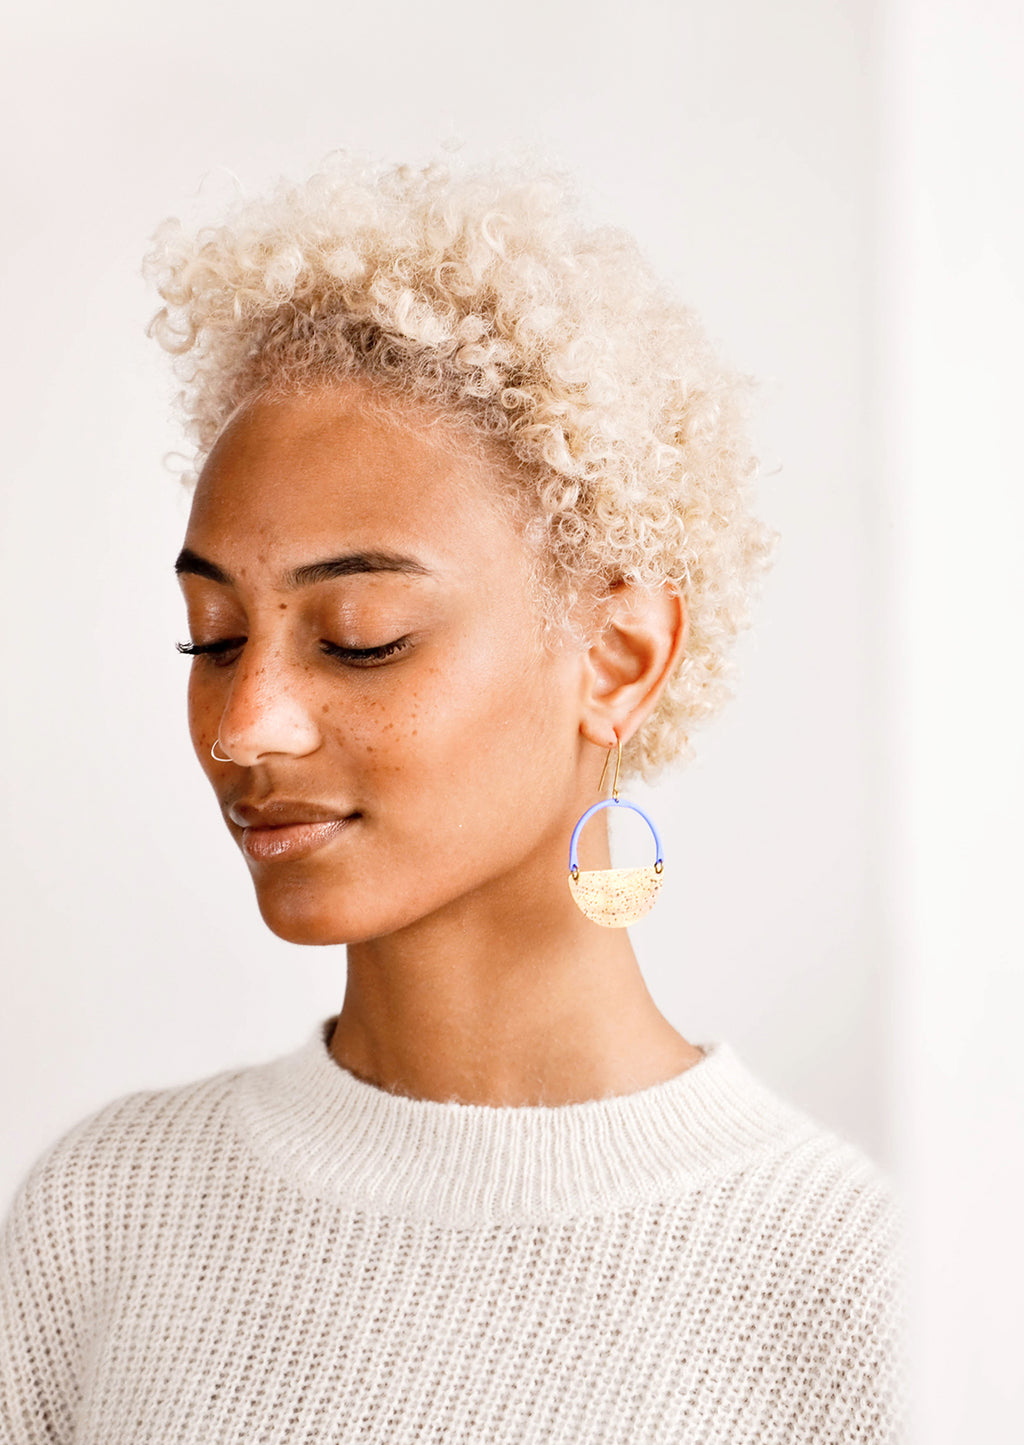 2: Model wearing blue and brass circular earrings